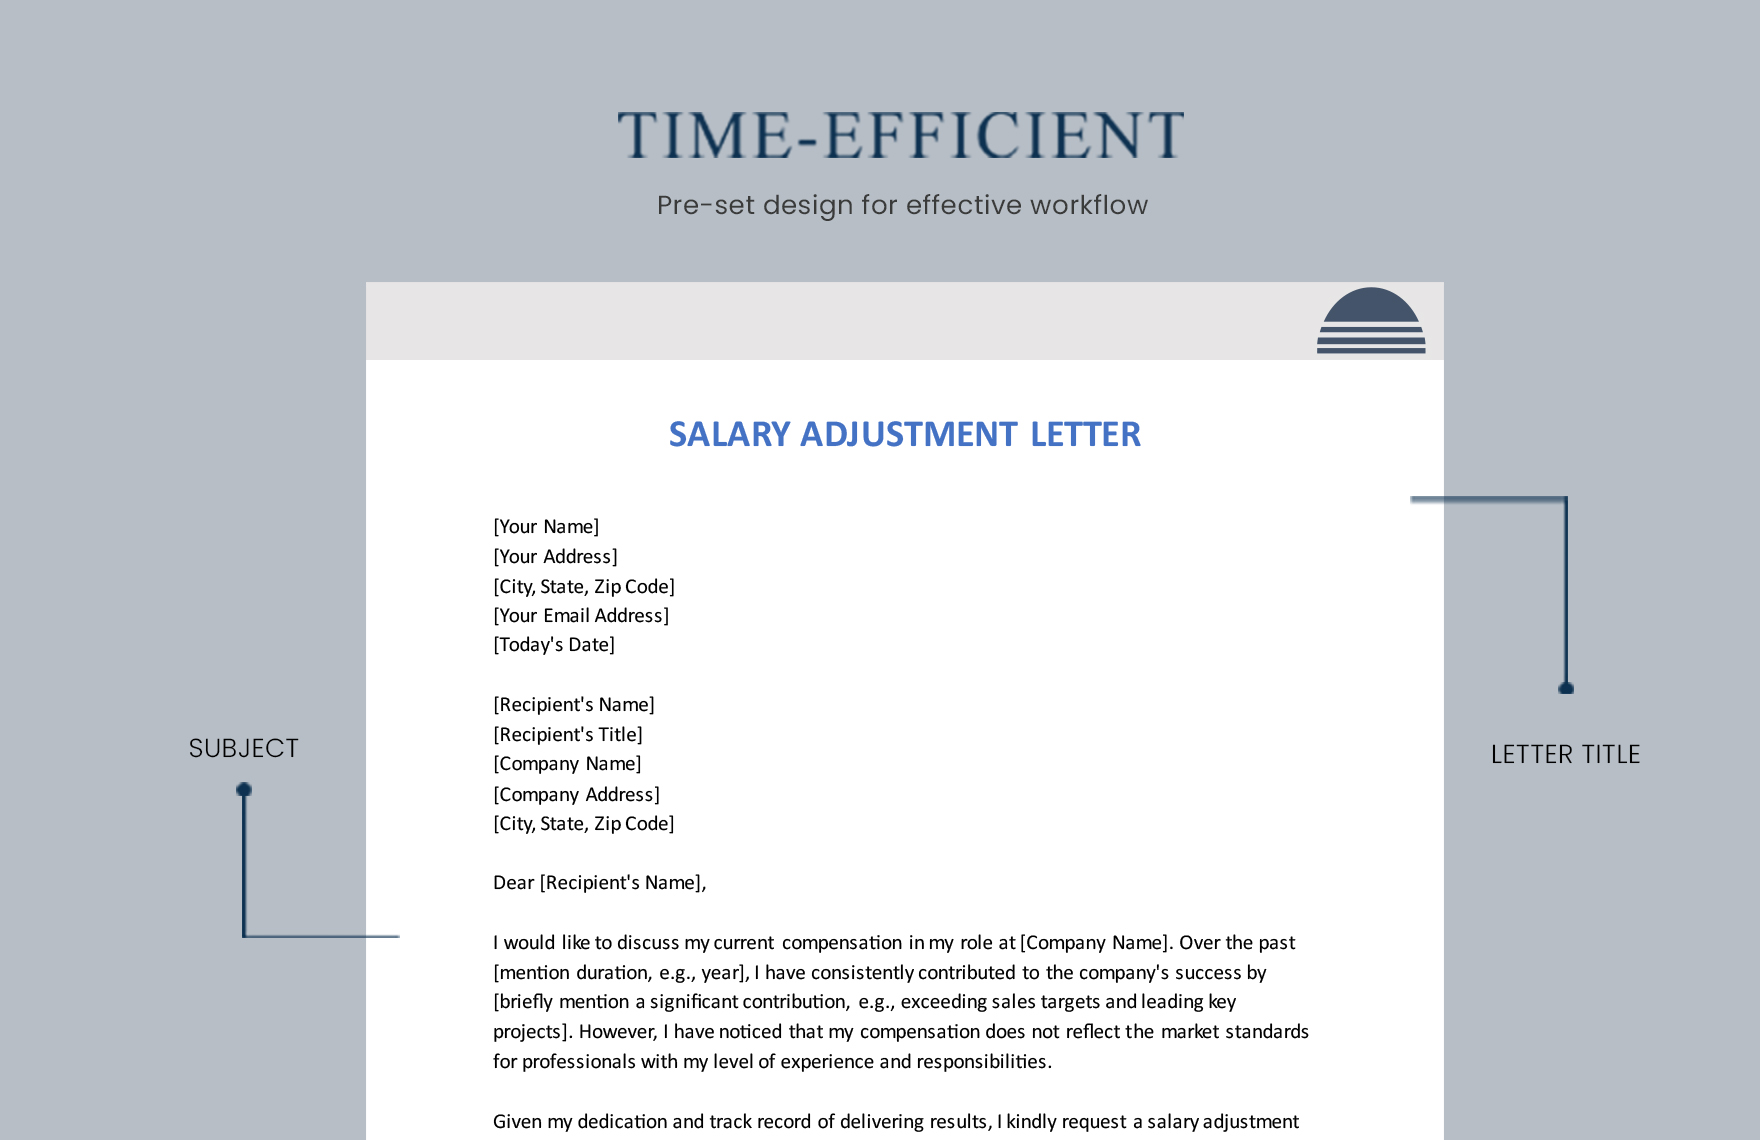 Salary Adjustment Letter